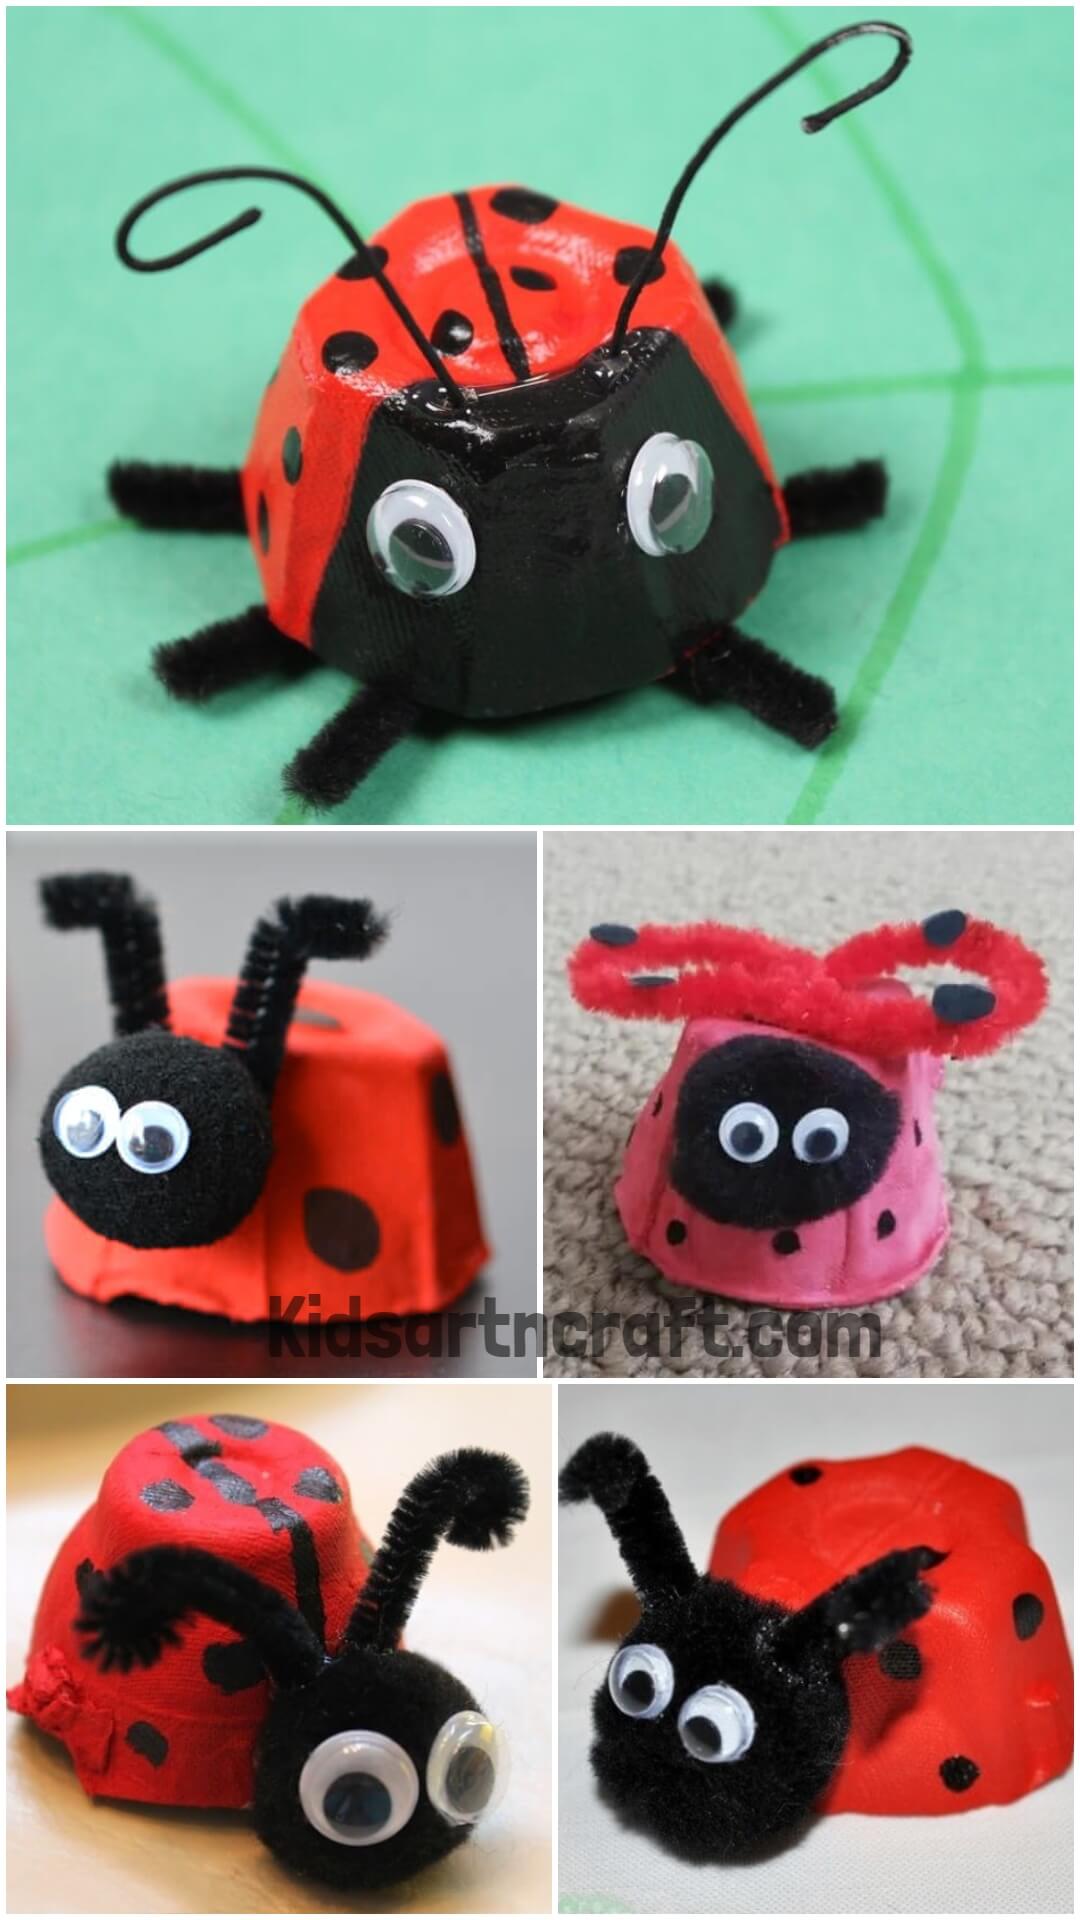 DIY Easy Egg Carton Ladybug Crafts 